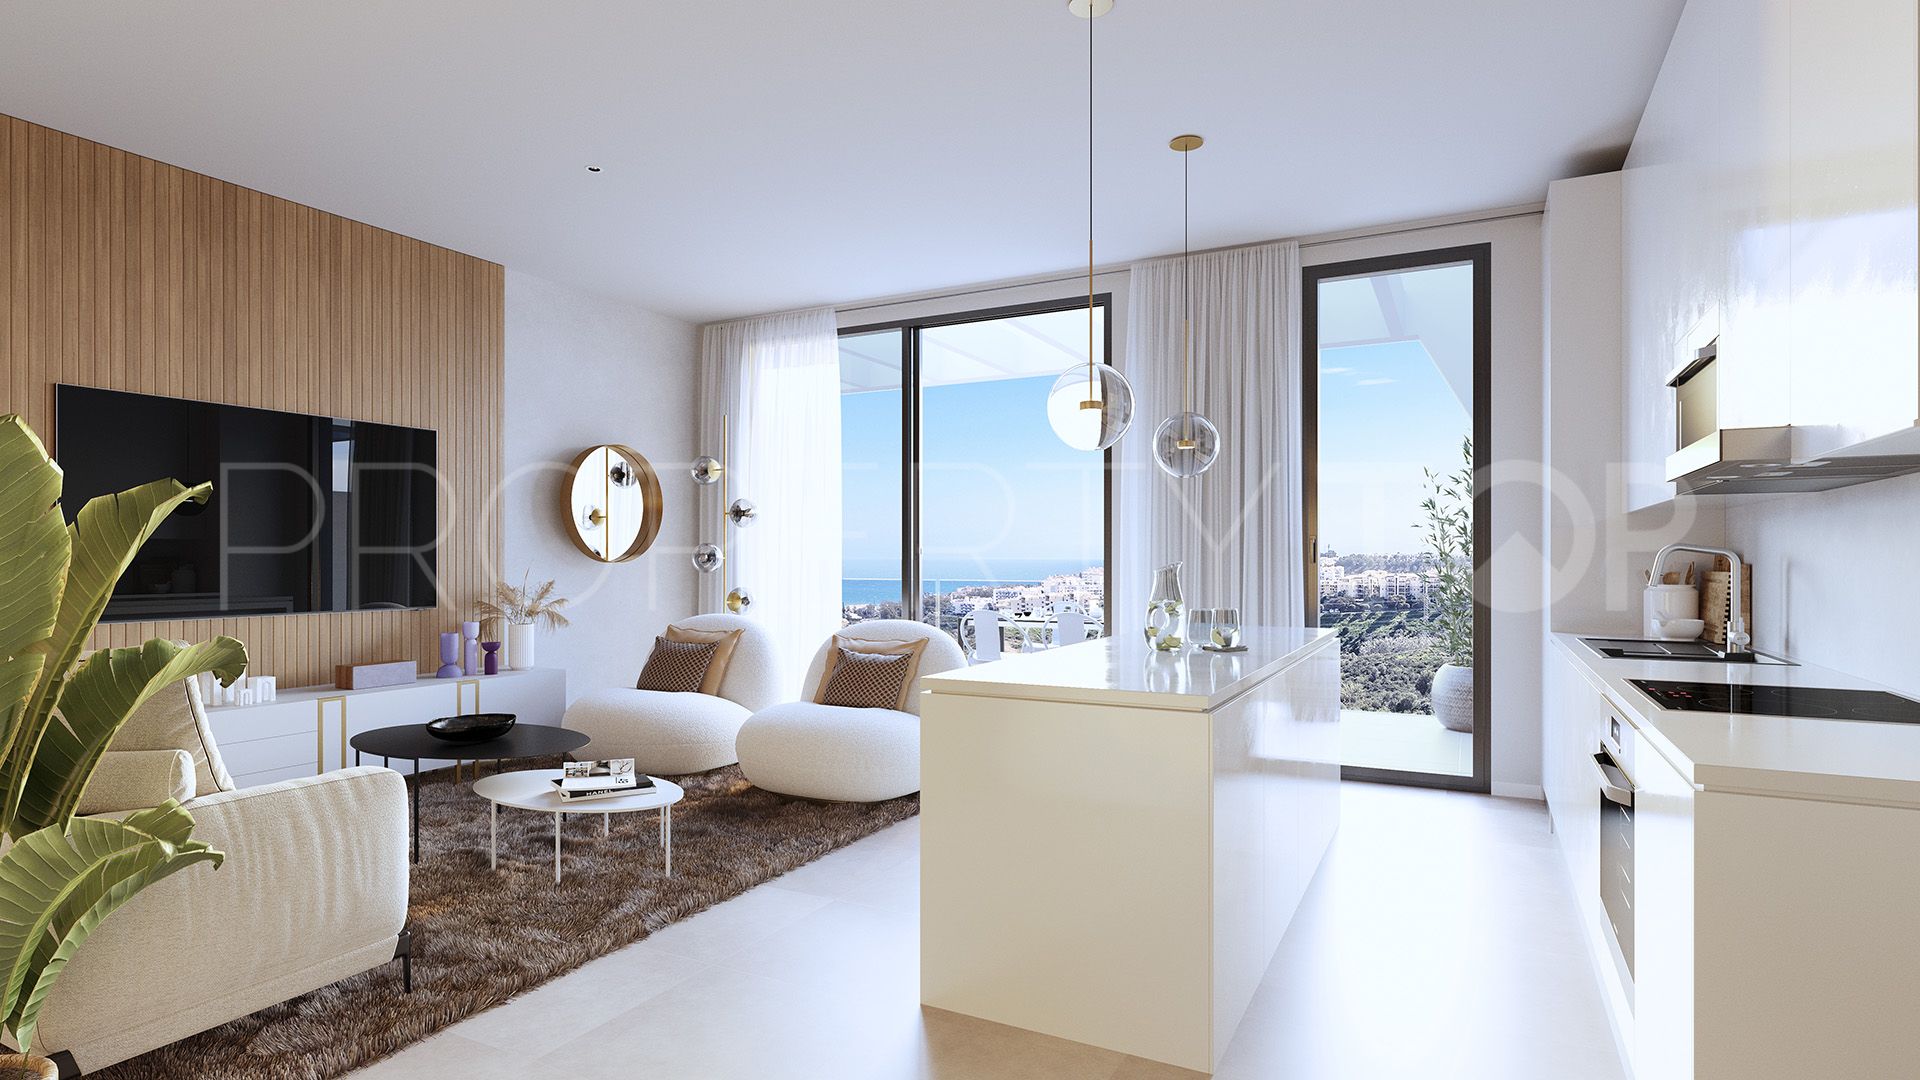 For sale 3 bedrooms duplex penthouse in Cala de Mijas